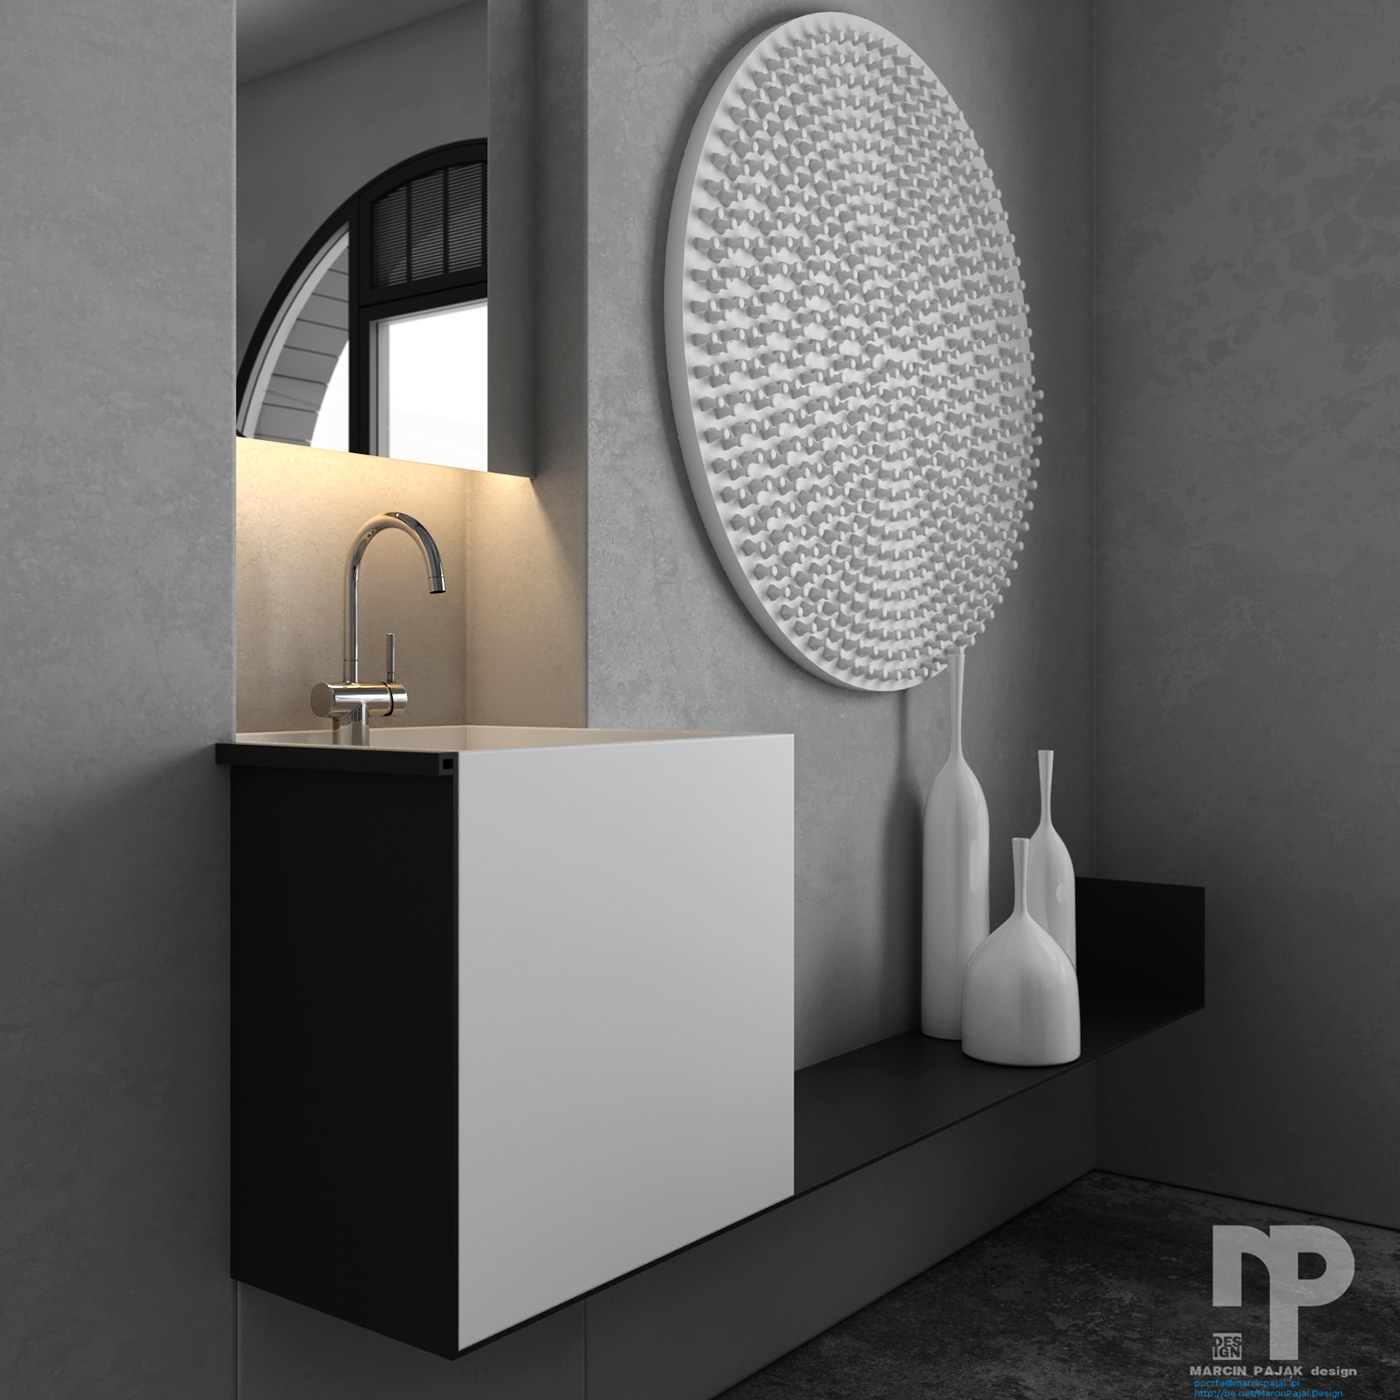 #cgi #interiordesign #visualization #bathroom #design #homedecor #3dmax